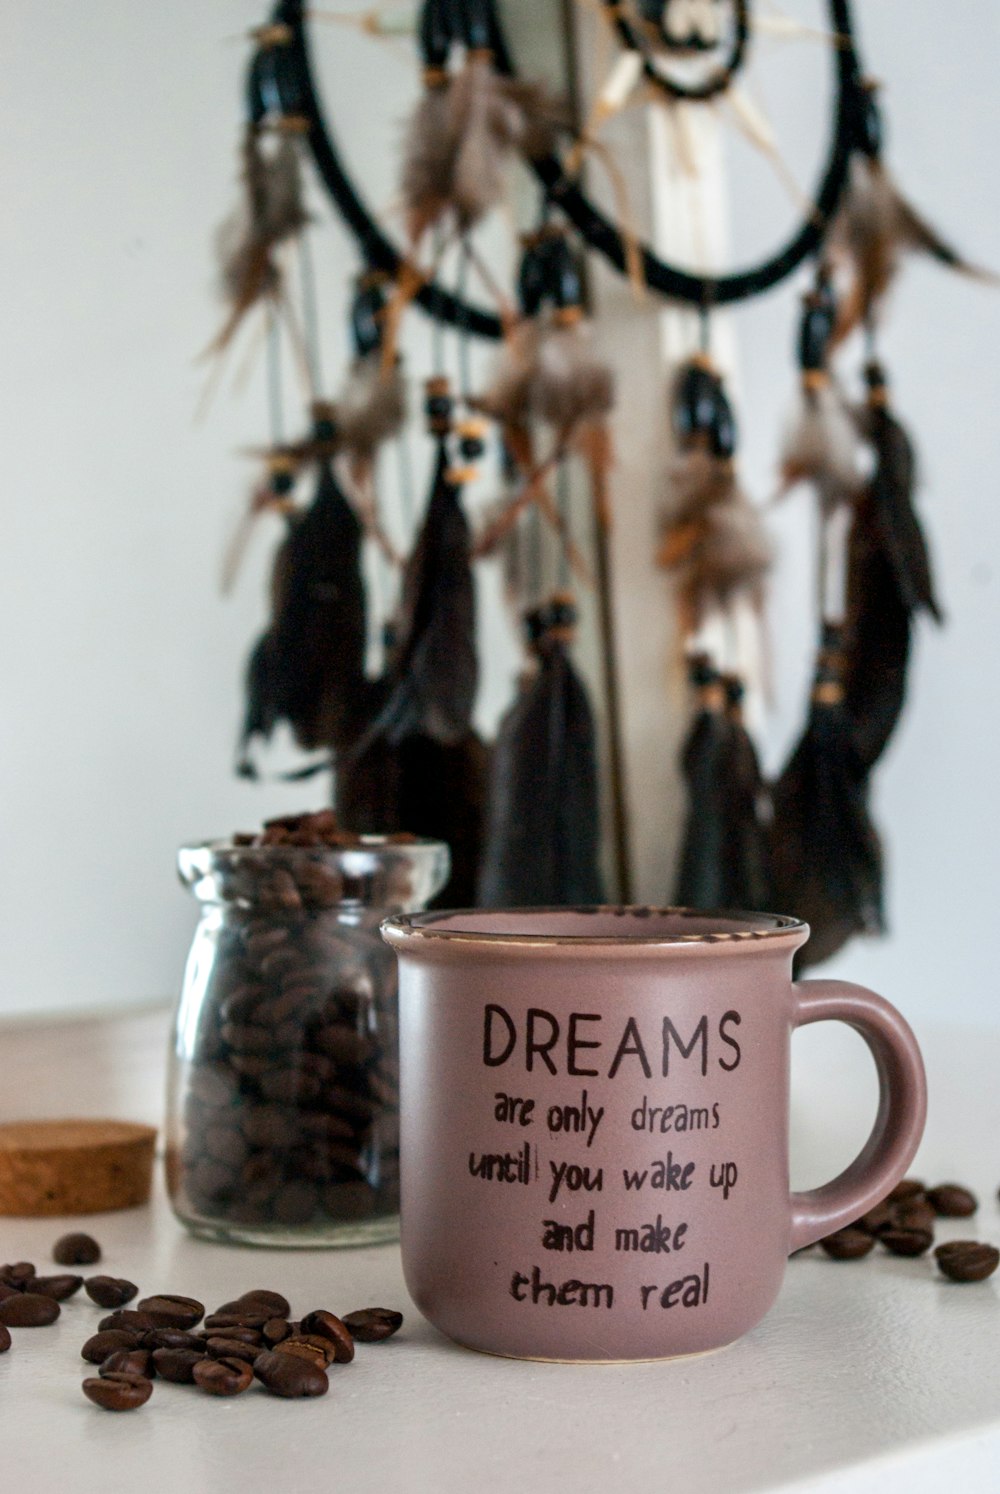 pink ceramic mug on brown wooden table